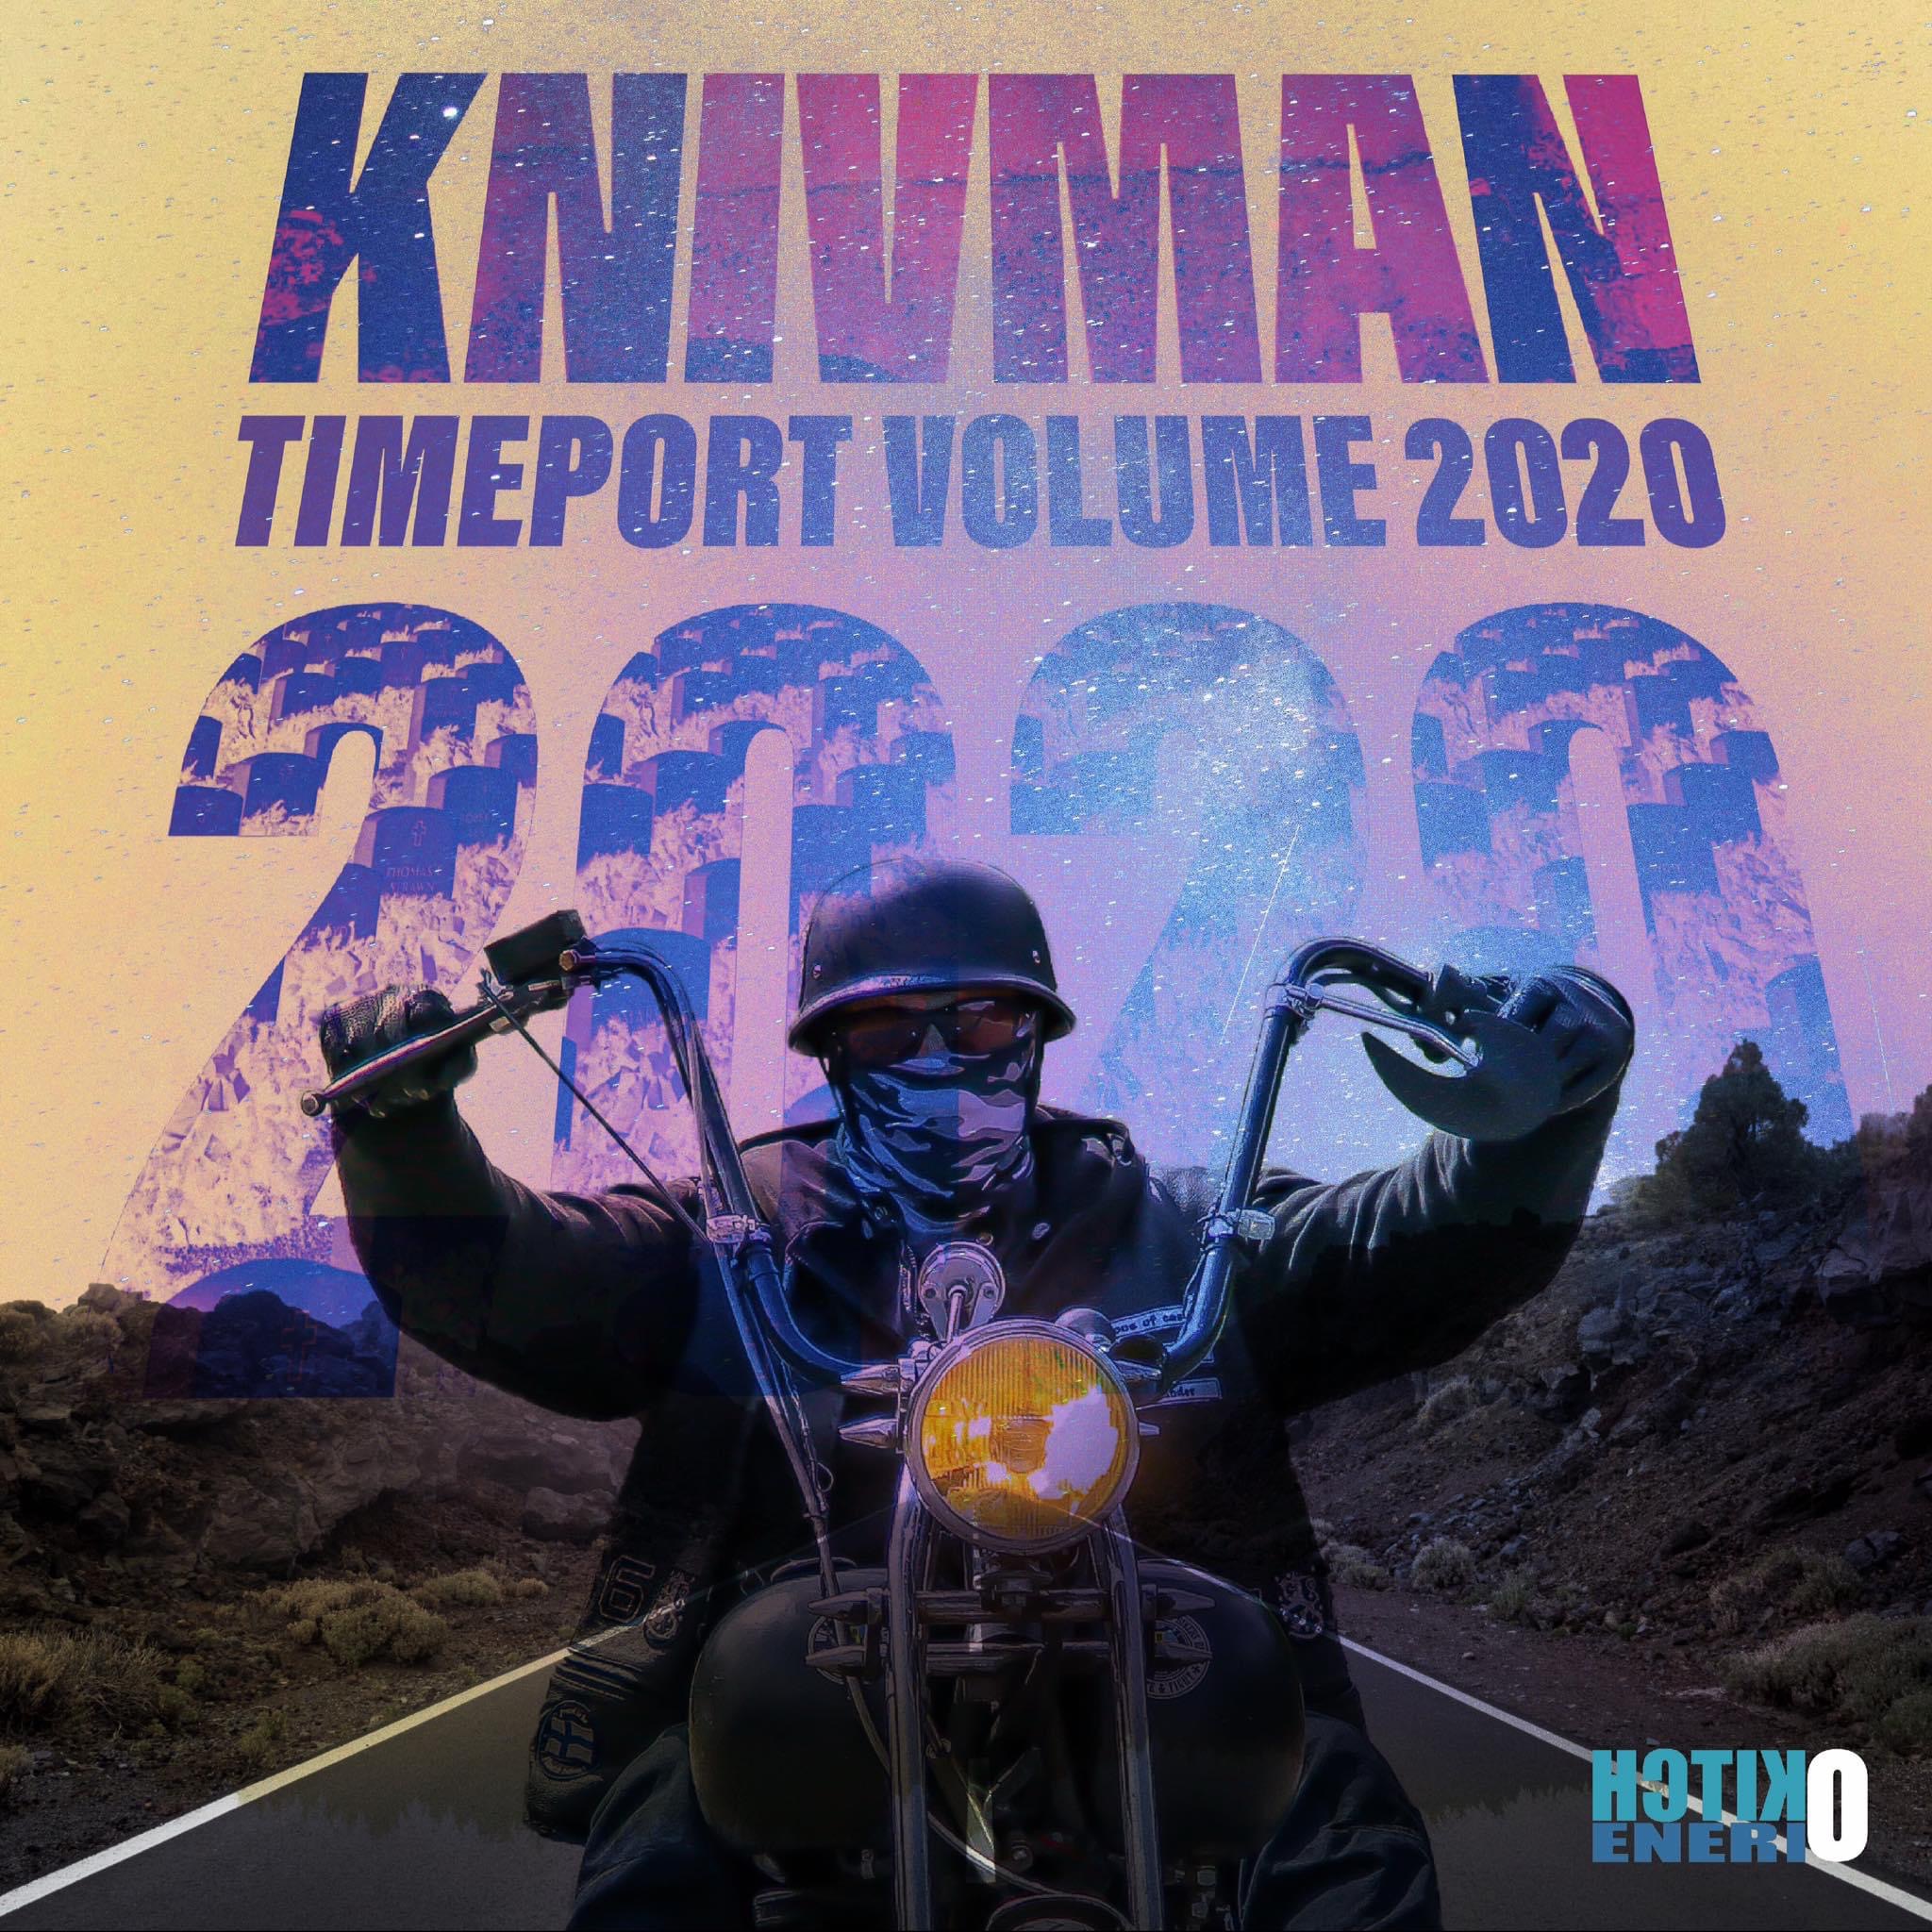 Timeport Volume 2020